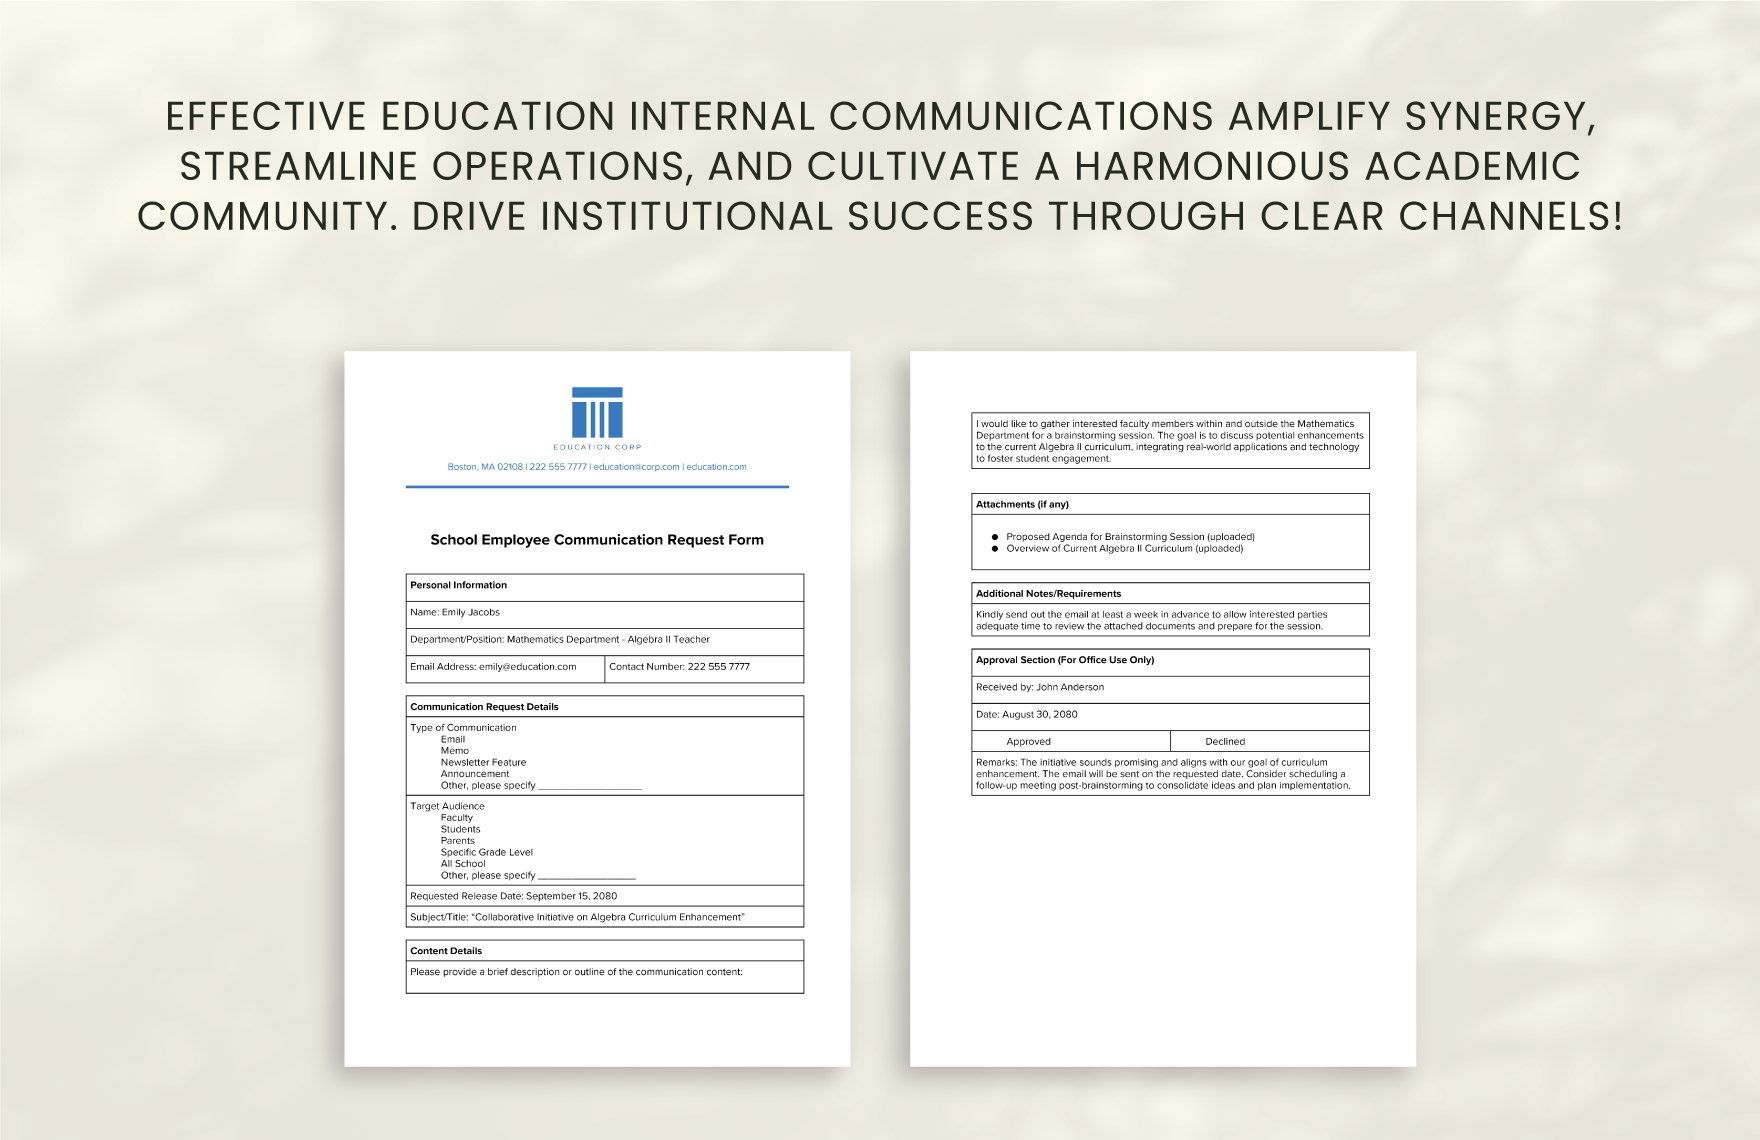 School Employee Communication Request Form